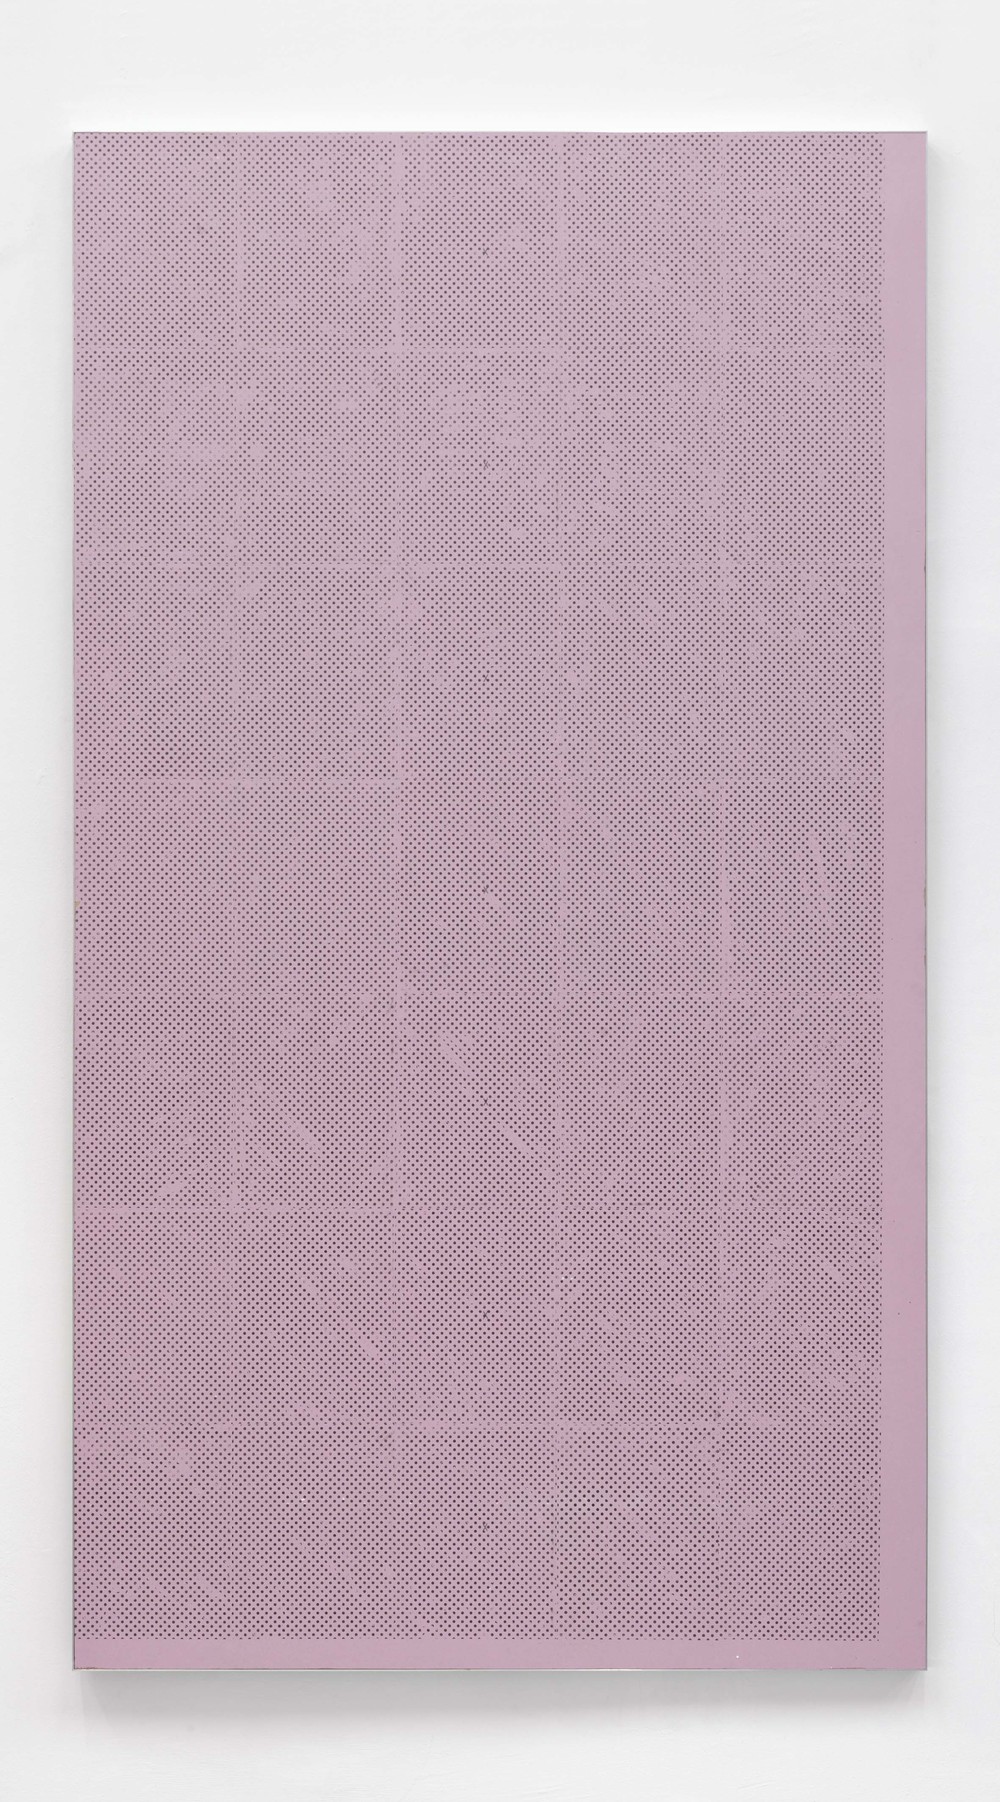 Nick Oberthaler, Untitled, 2015